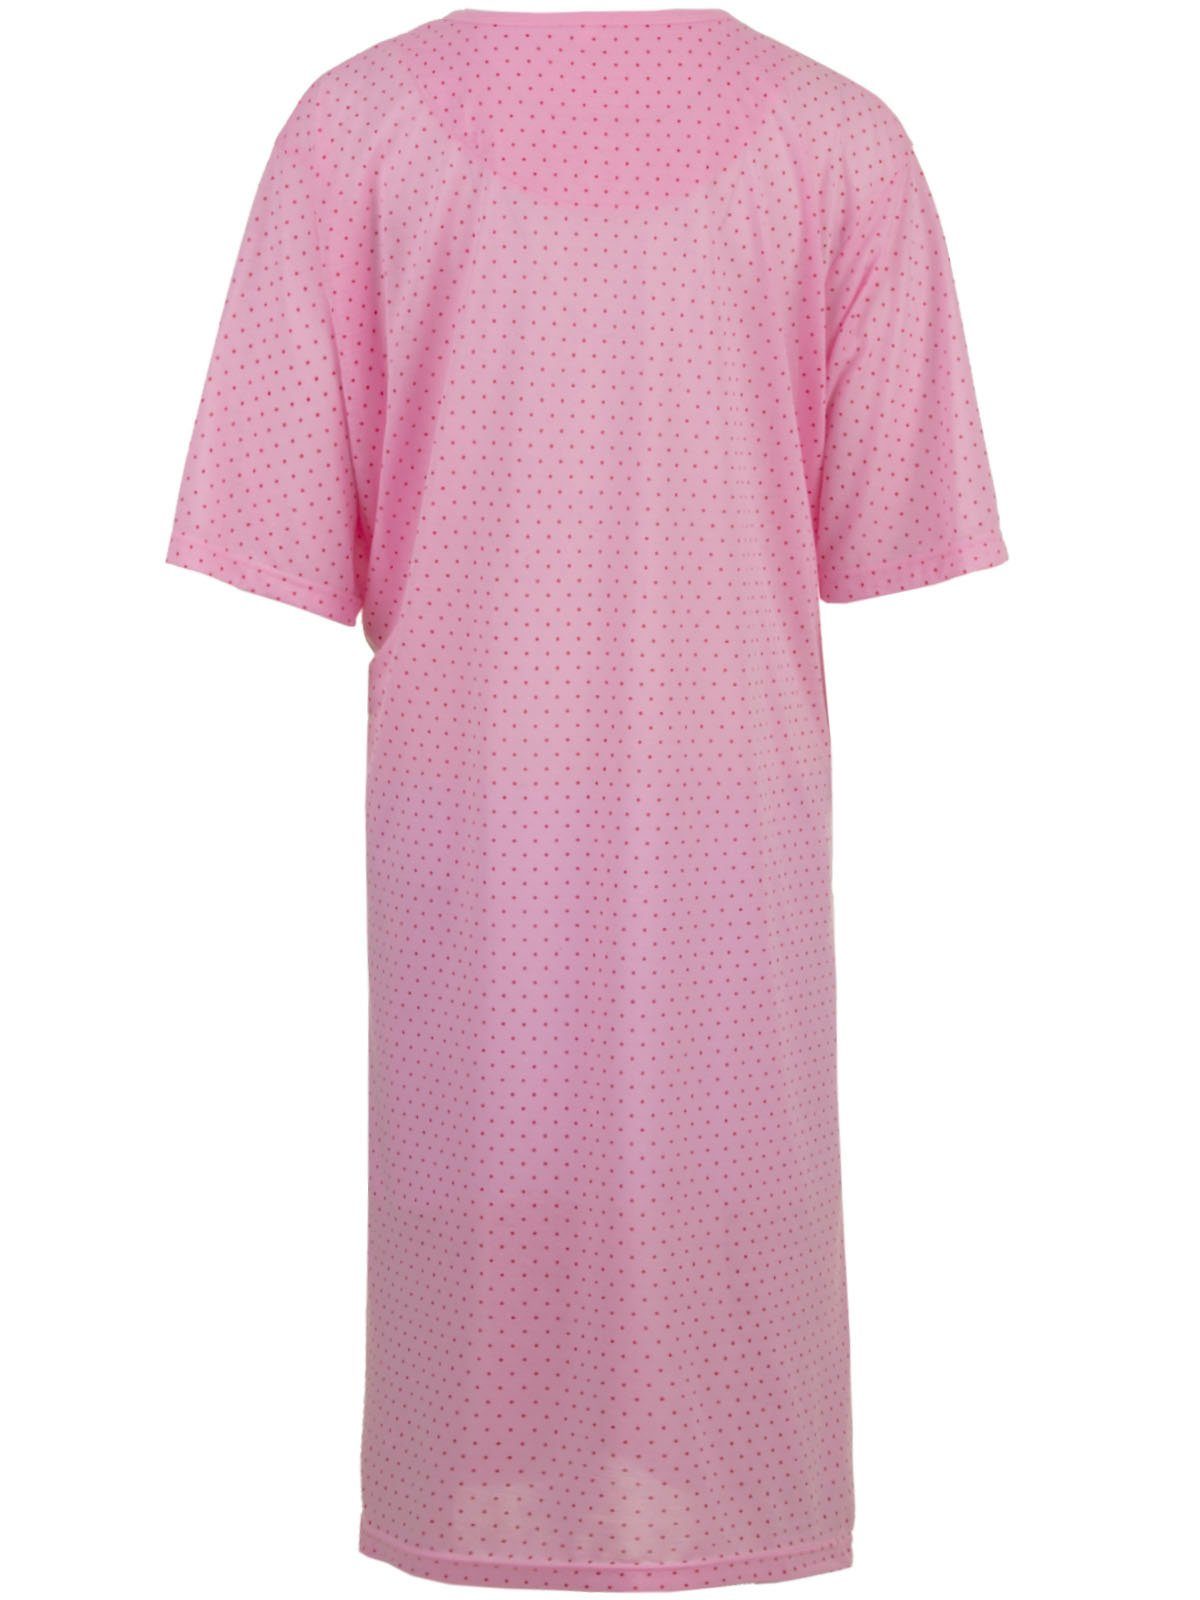 Kurzarm Nachthemd Lucky - rosa Punkte Nachthemd 3XL-6XL